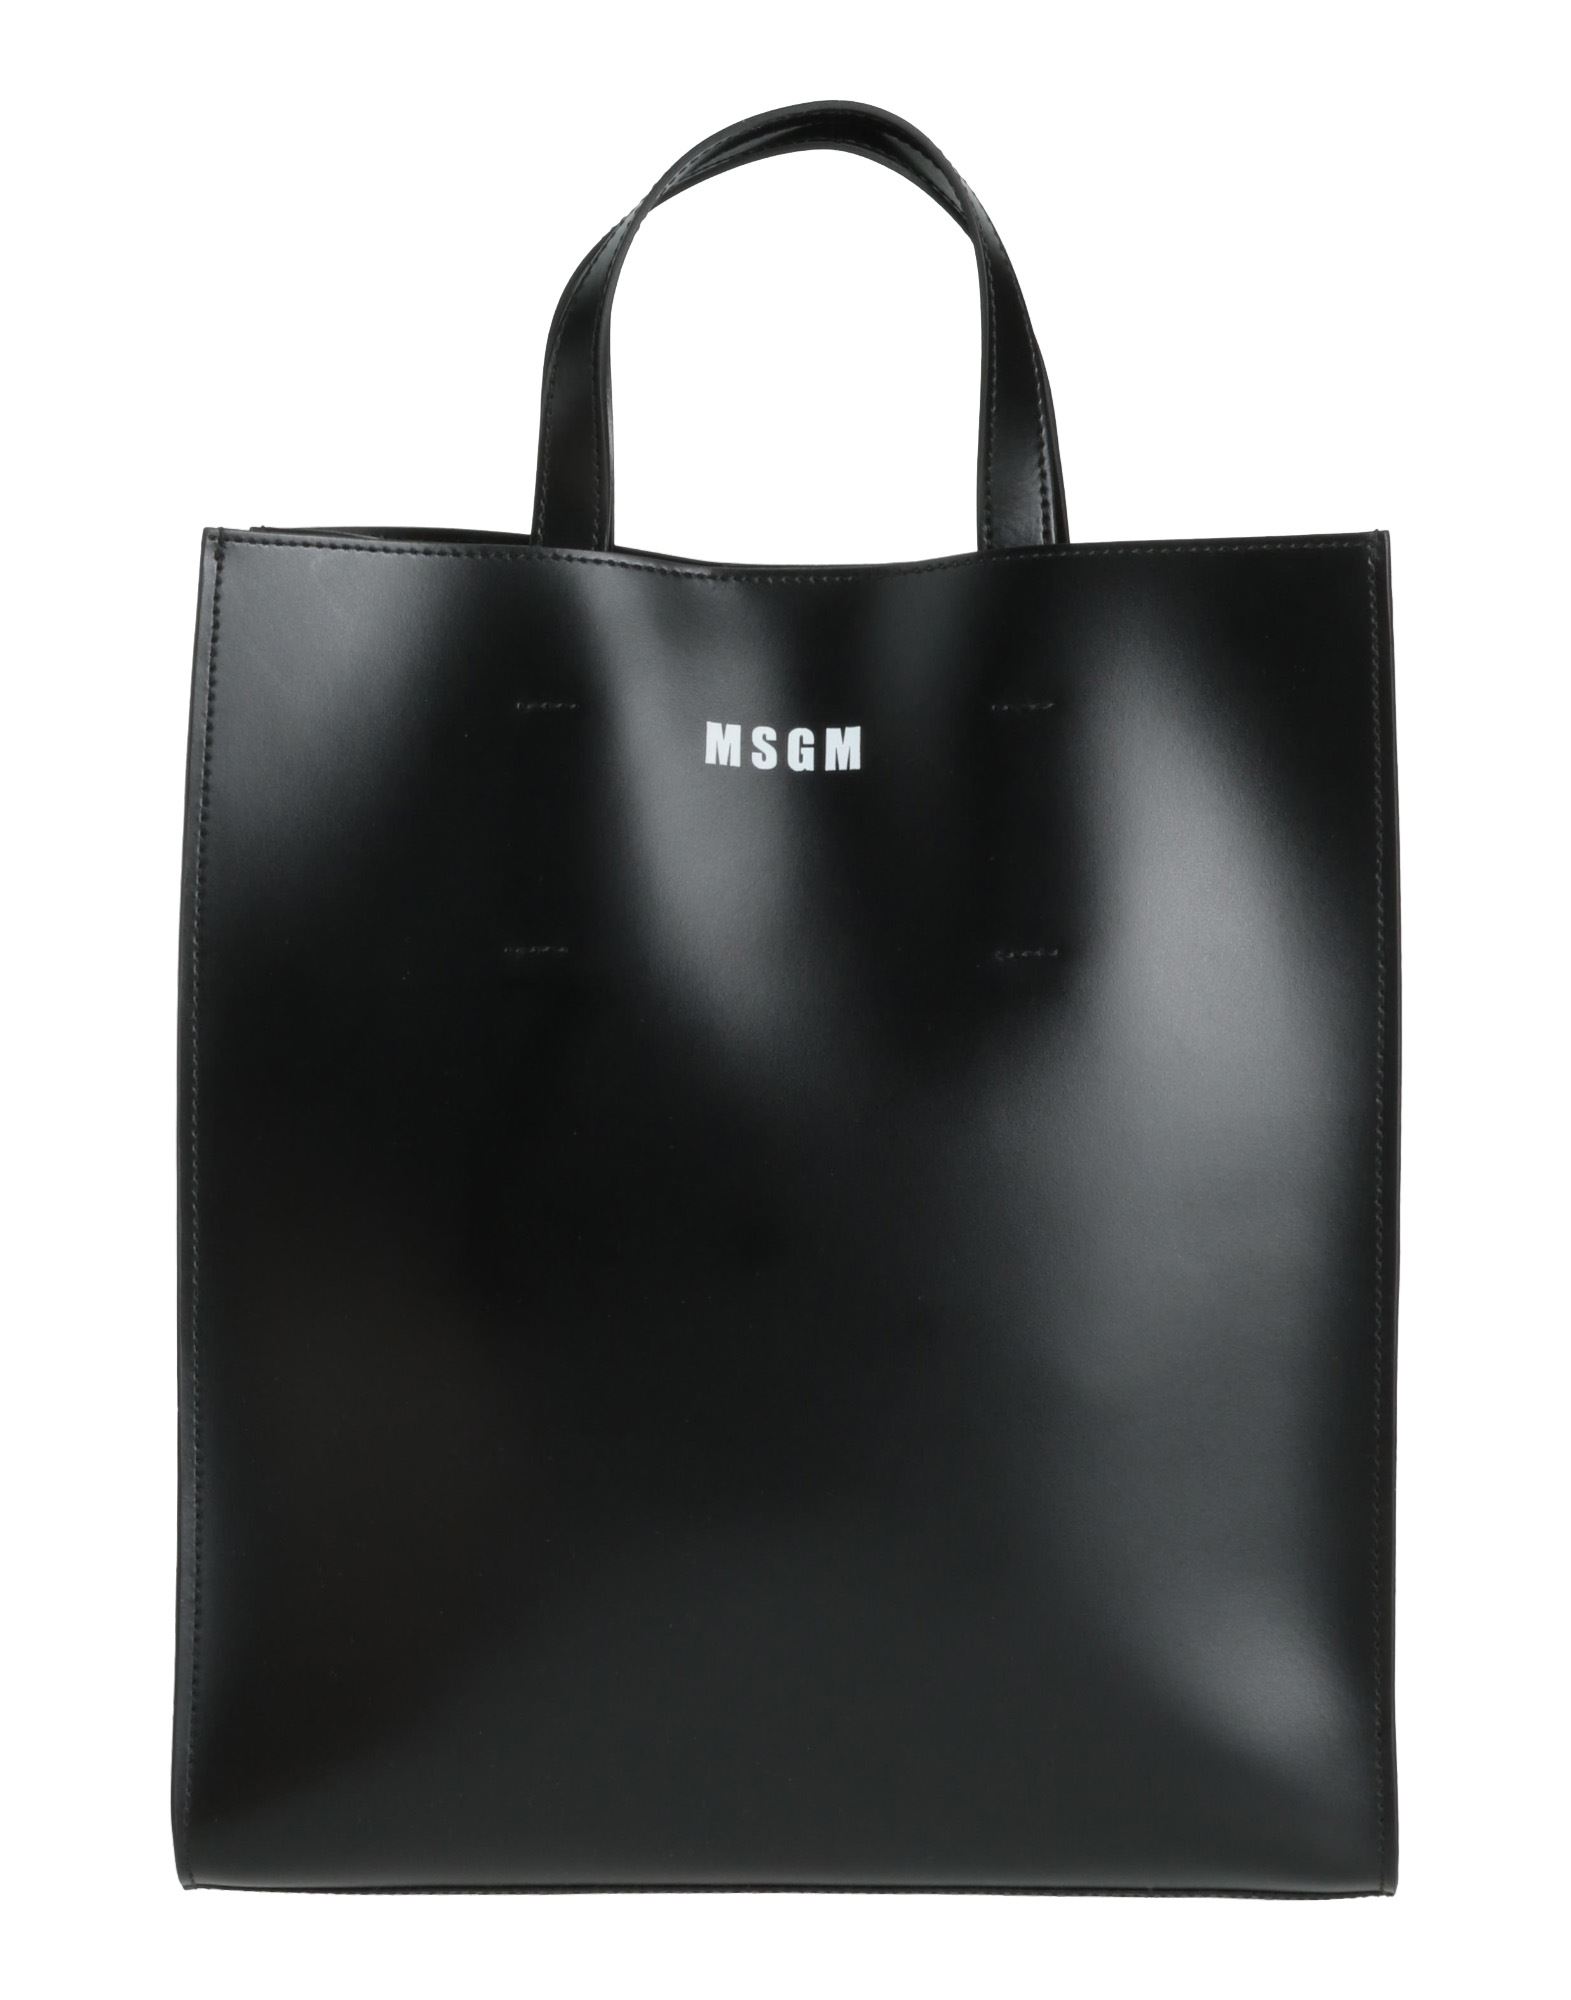 Msgm Handbags In Black